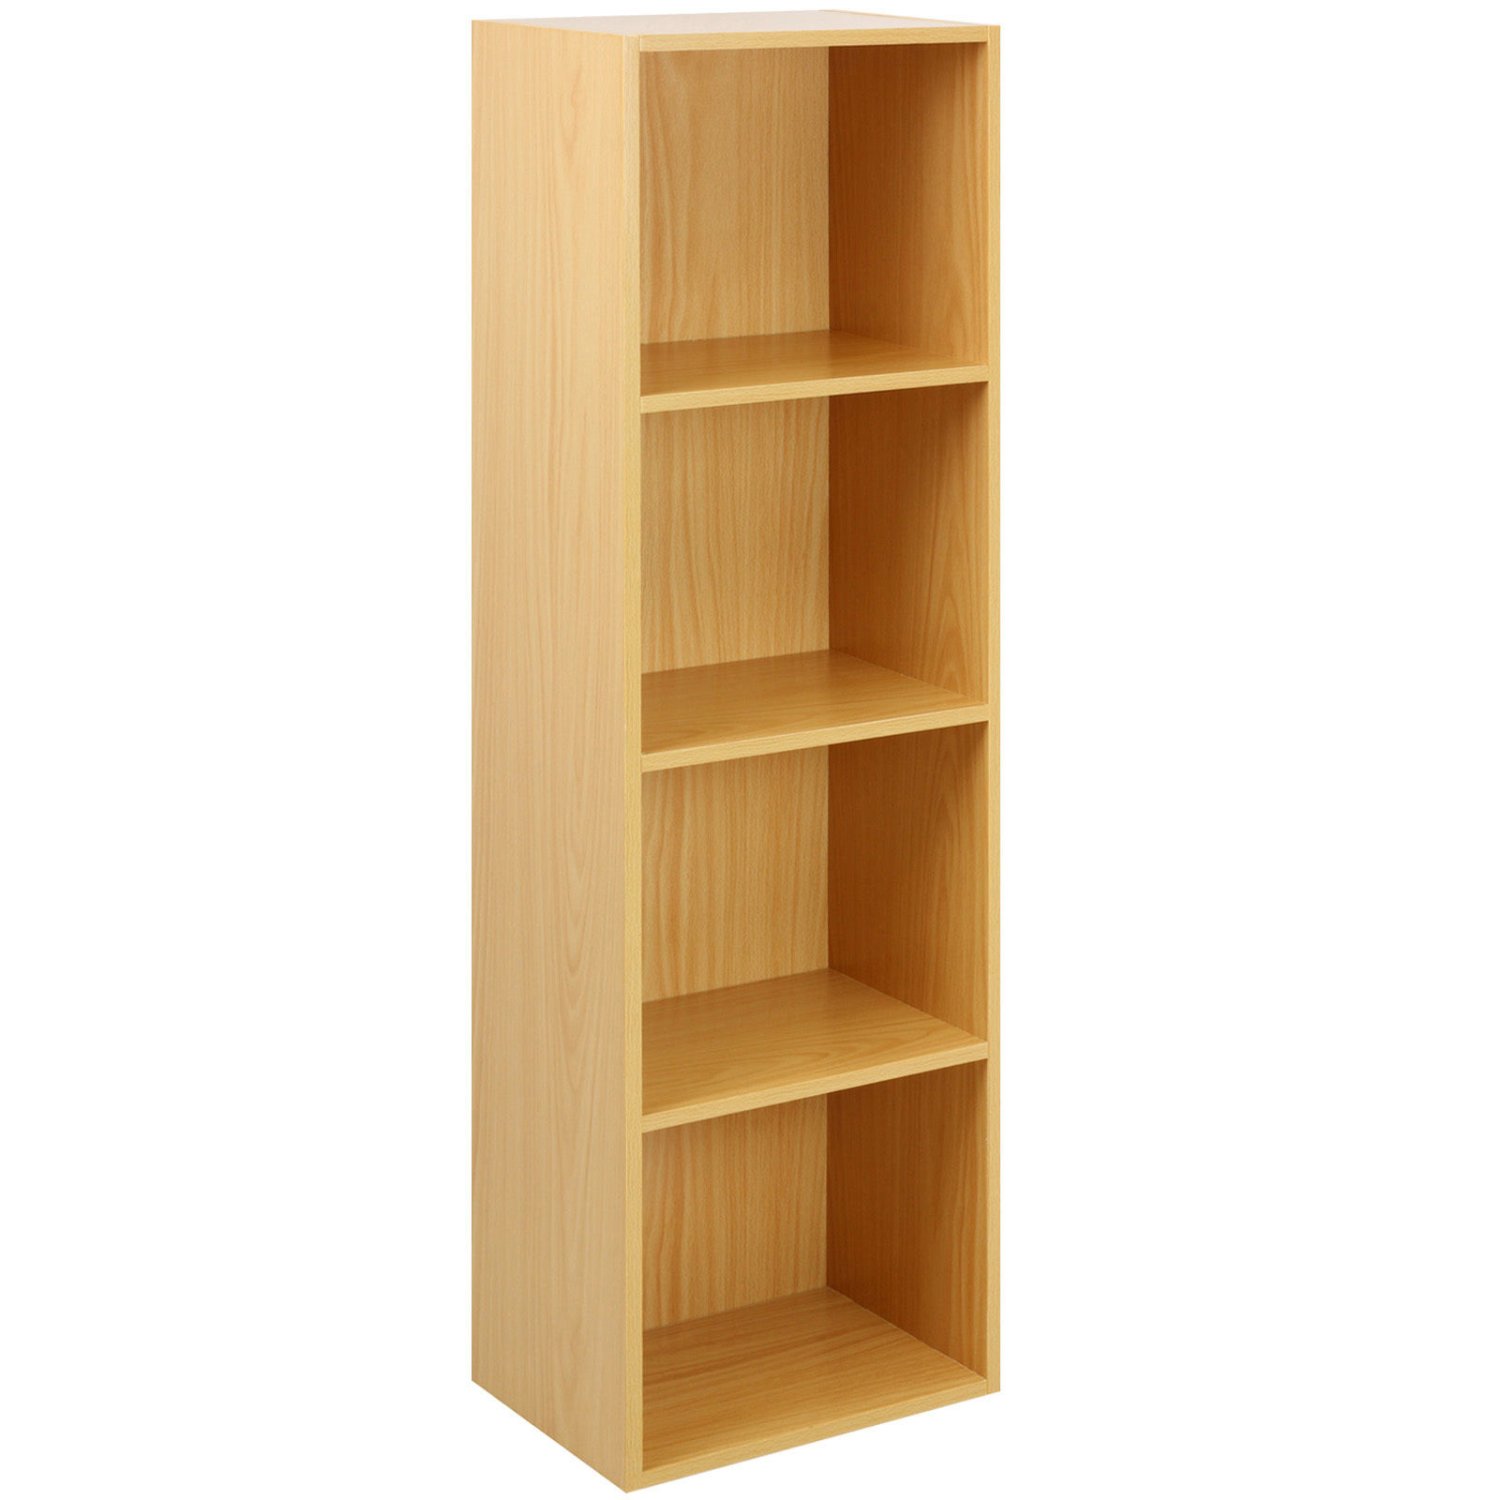 4 Tier Wooden Shelf Beech Bookcase Shelving Storage Display Rack